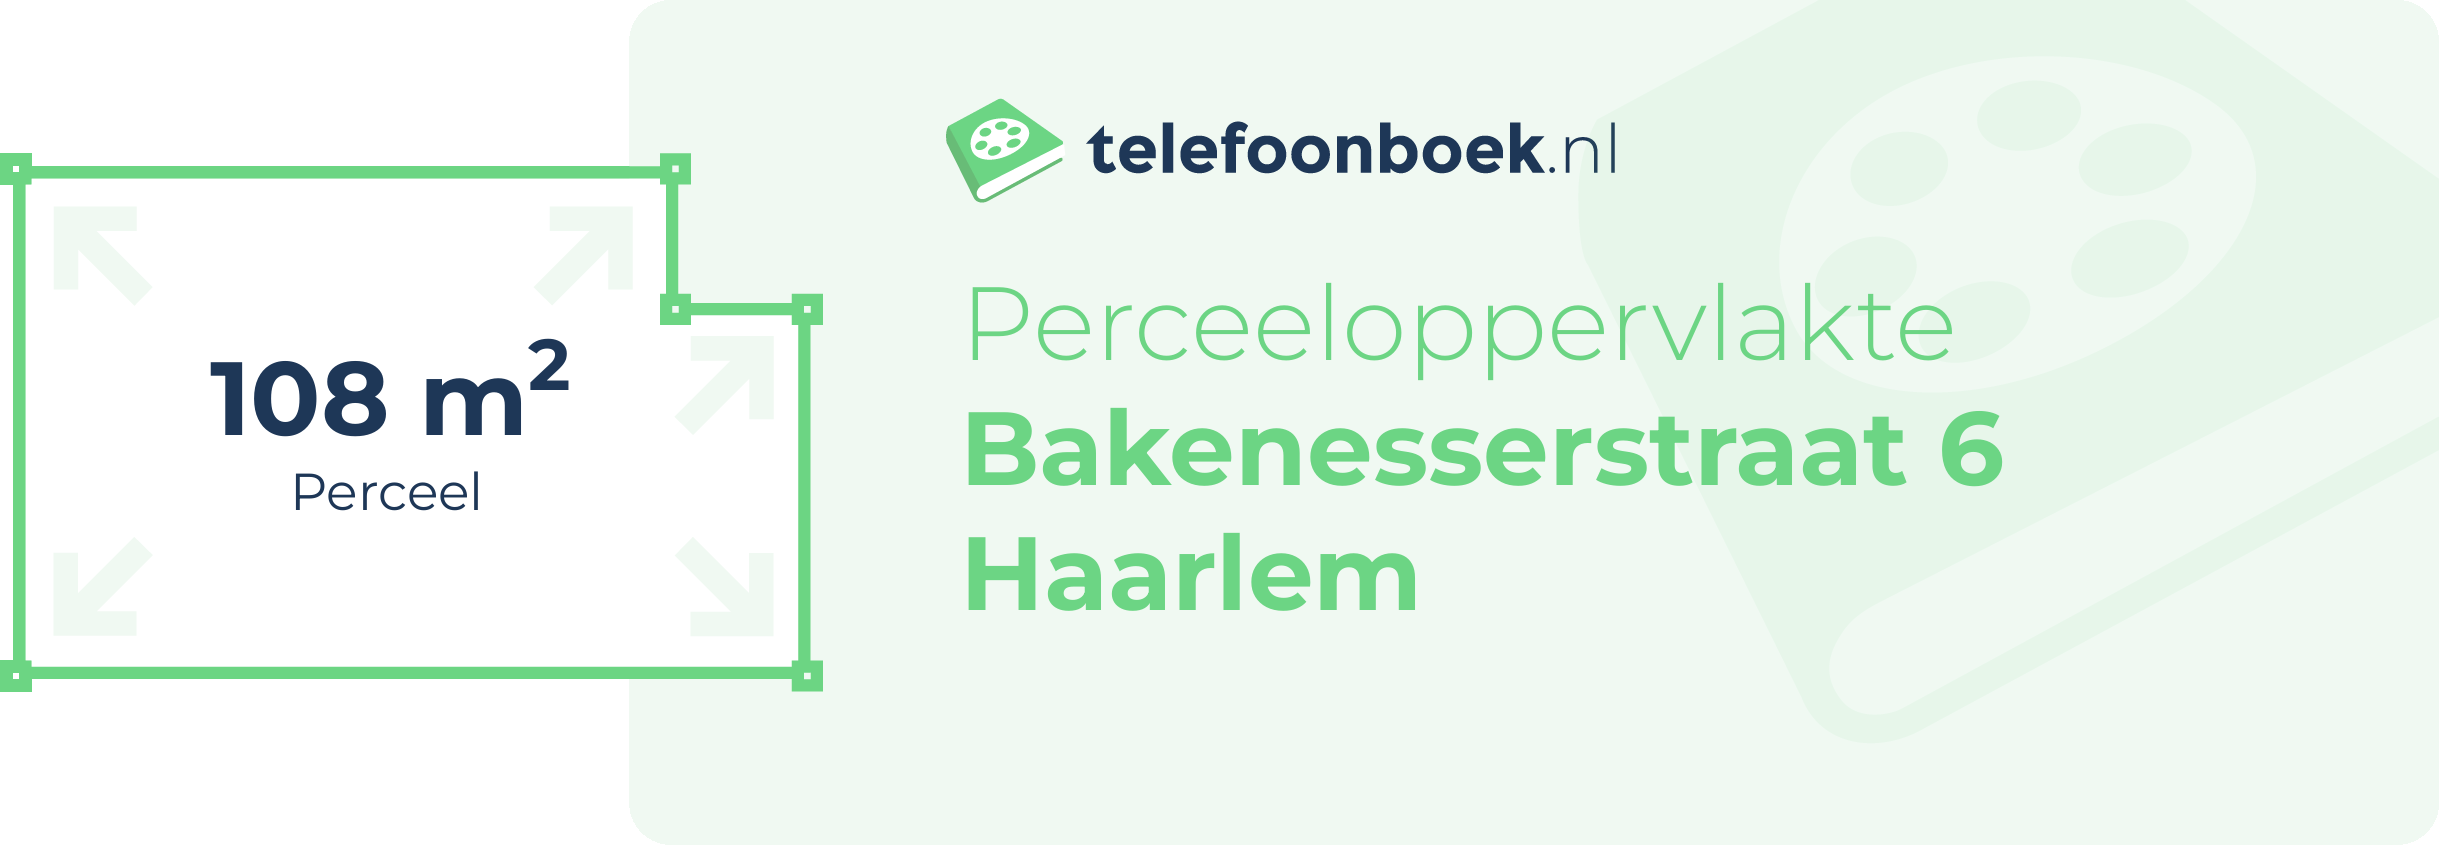 Perceeloppervlakte Bakenesserstraat 6 Haarlem